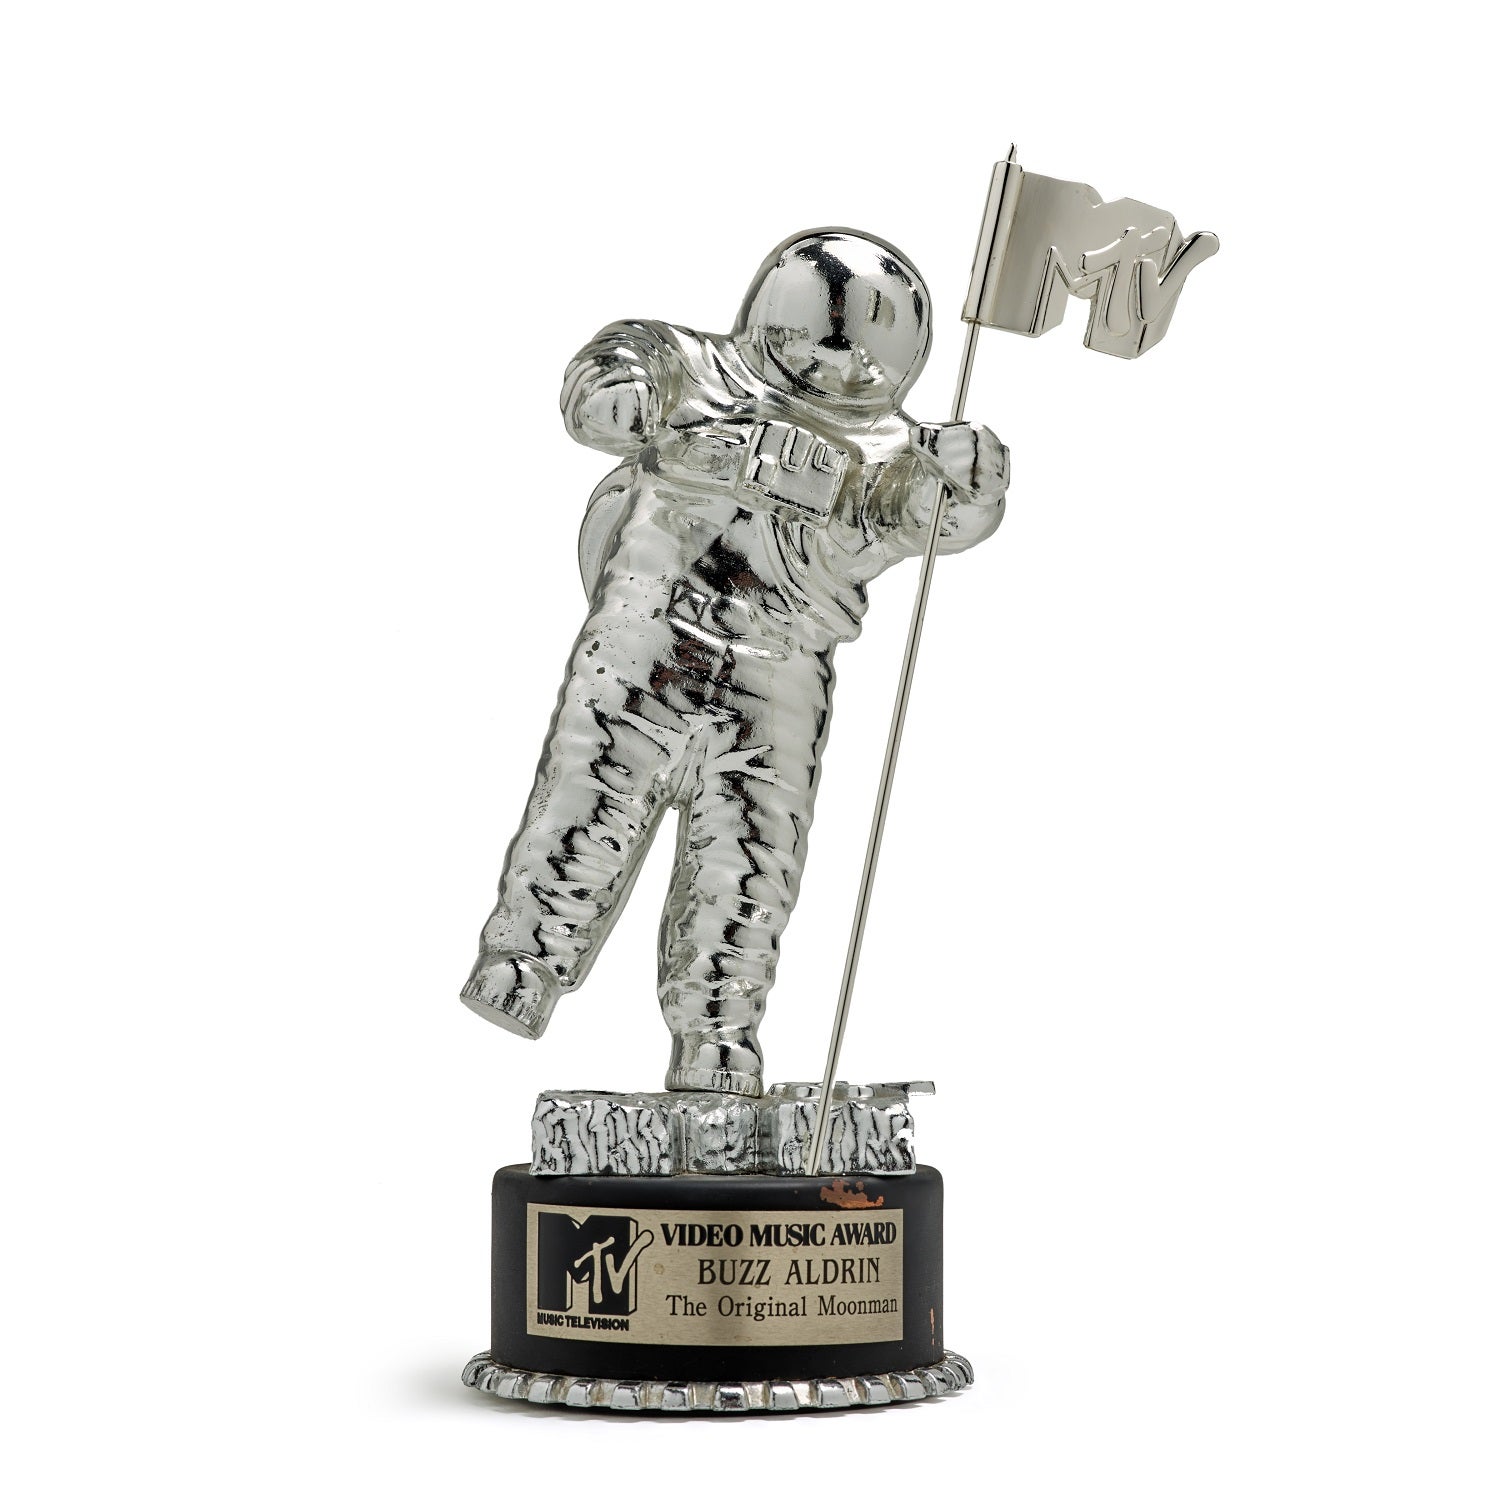 Silver astronaut trophy with "original moonman" plaque including MTV logo